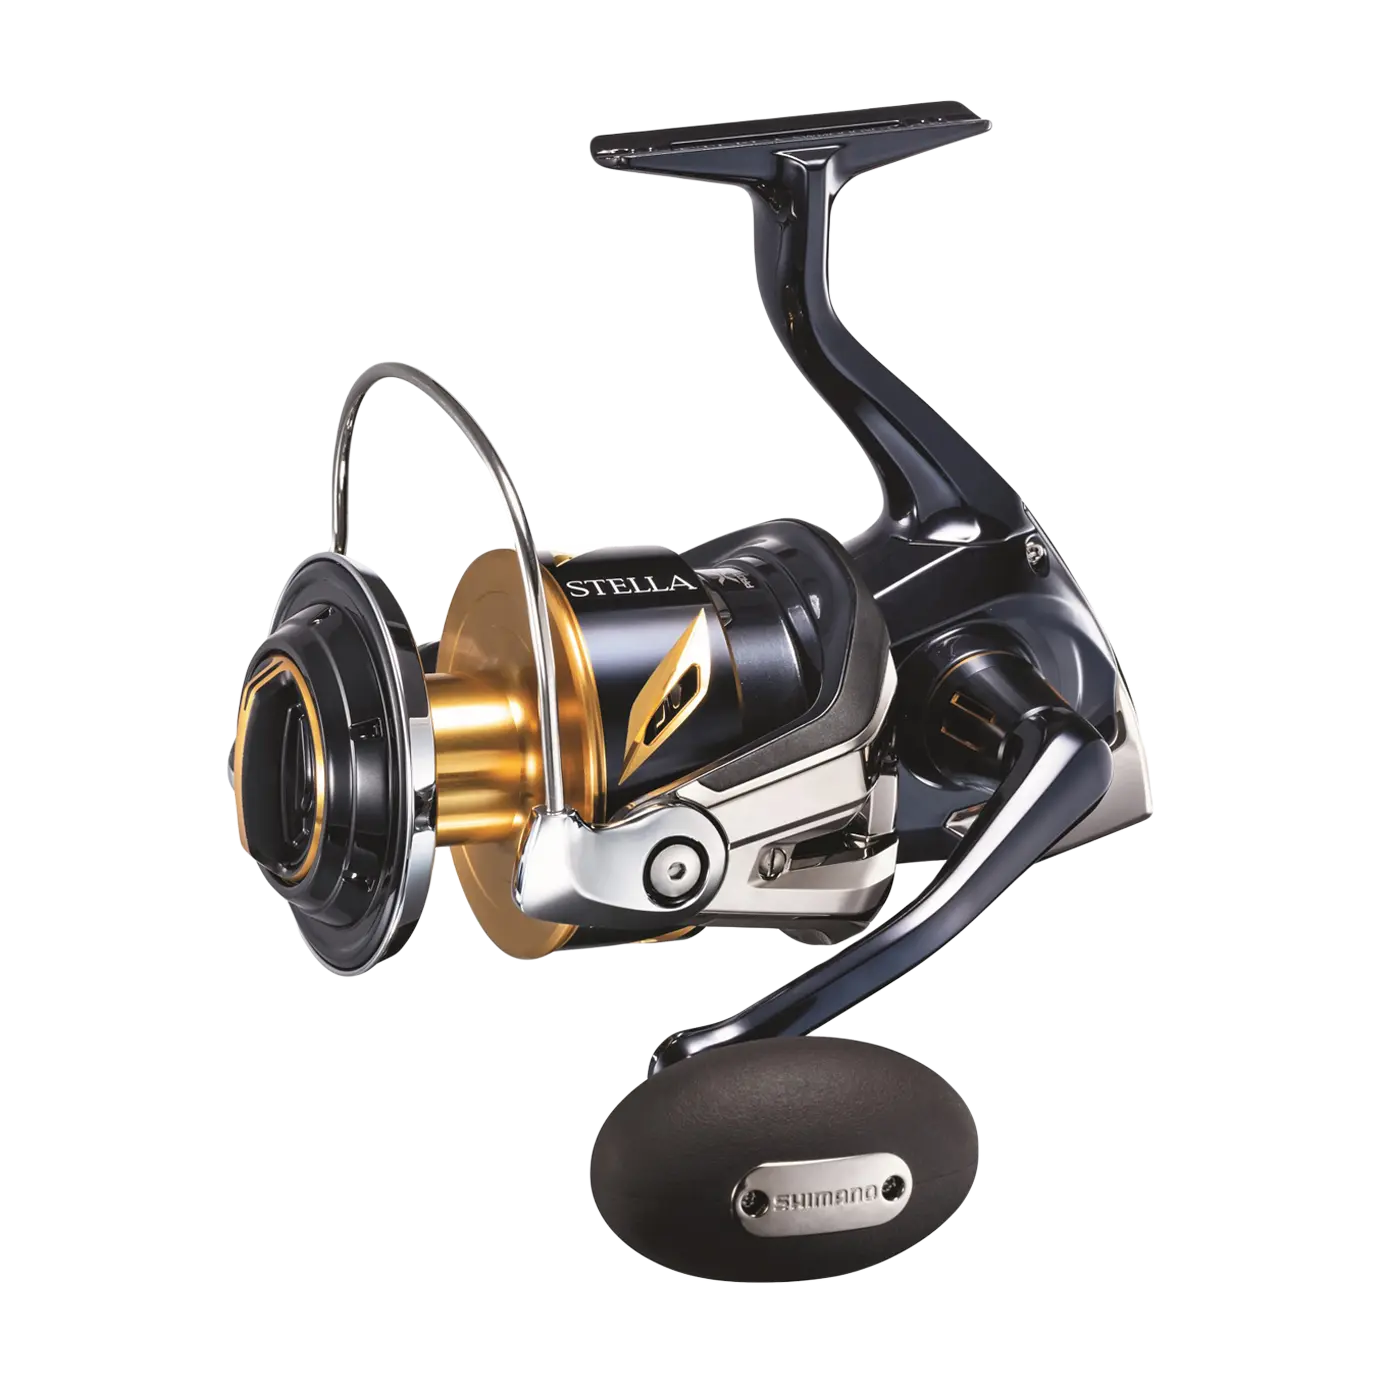 New Stella 14000 Swb Xg Spin Fishing Reel - United Kingdom